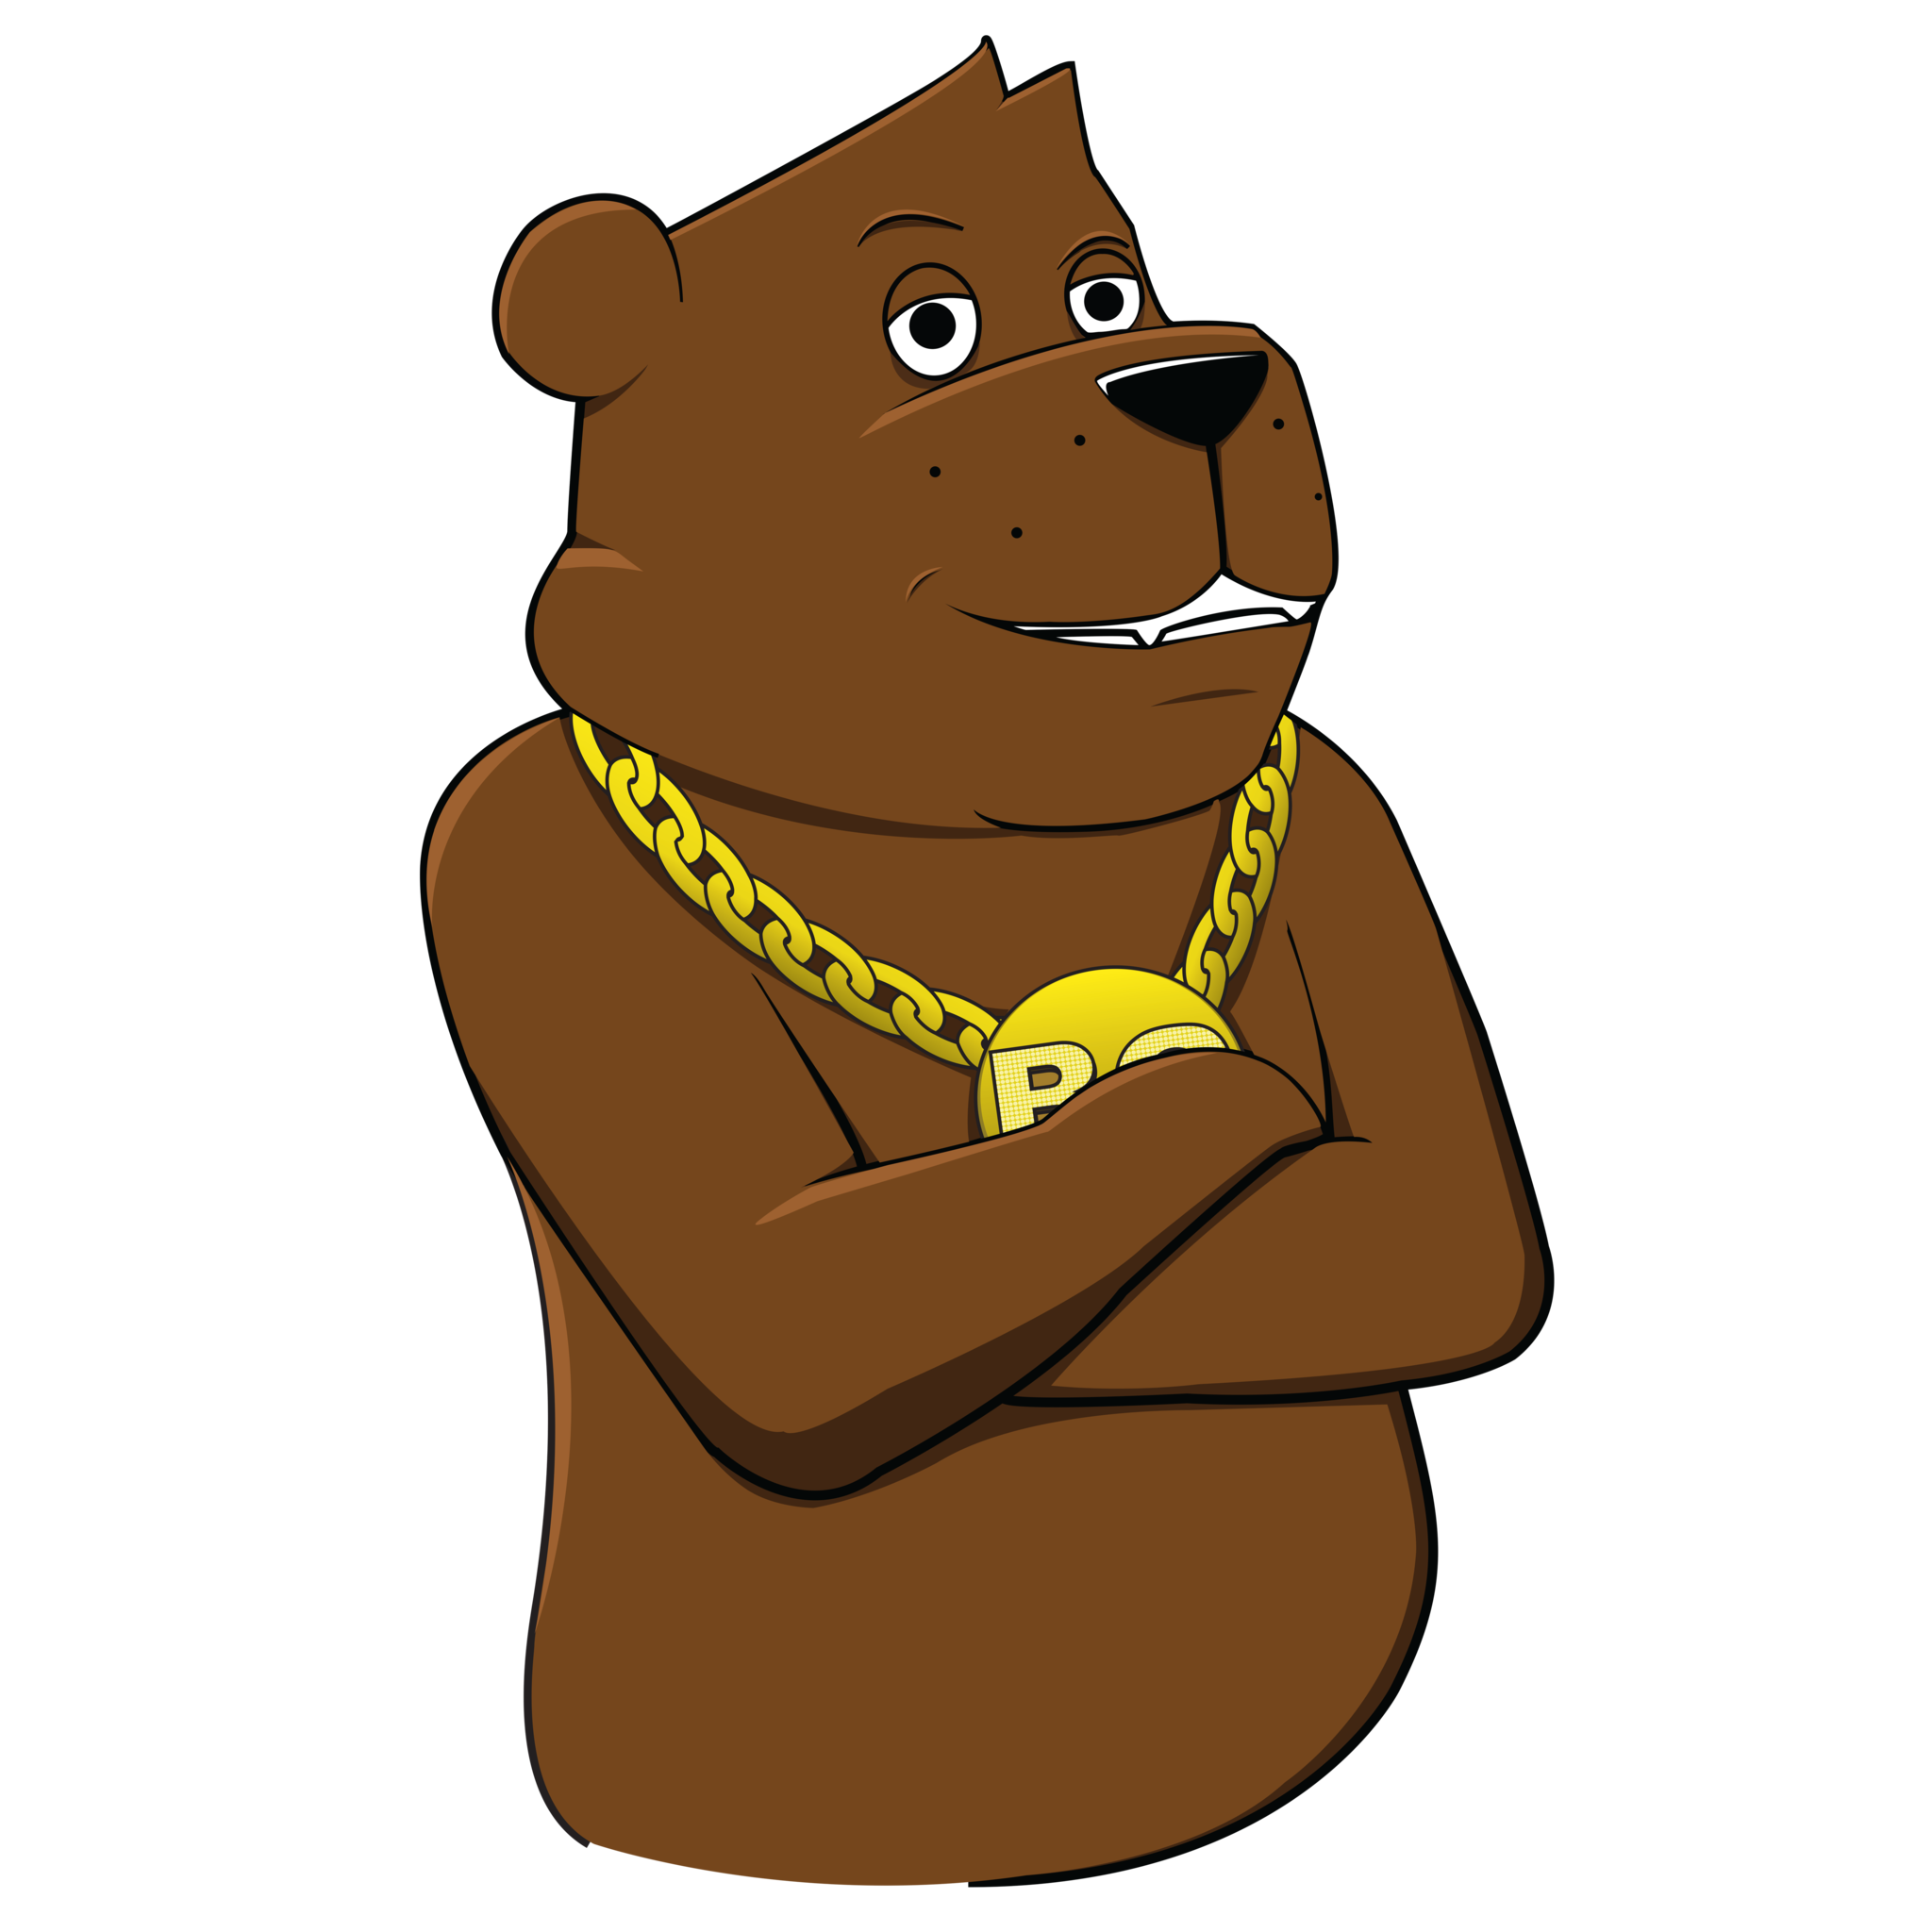 Goldie Медведь бесплатно PNG Image